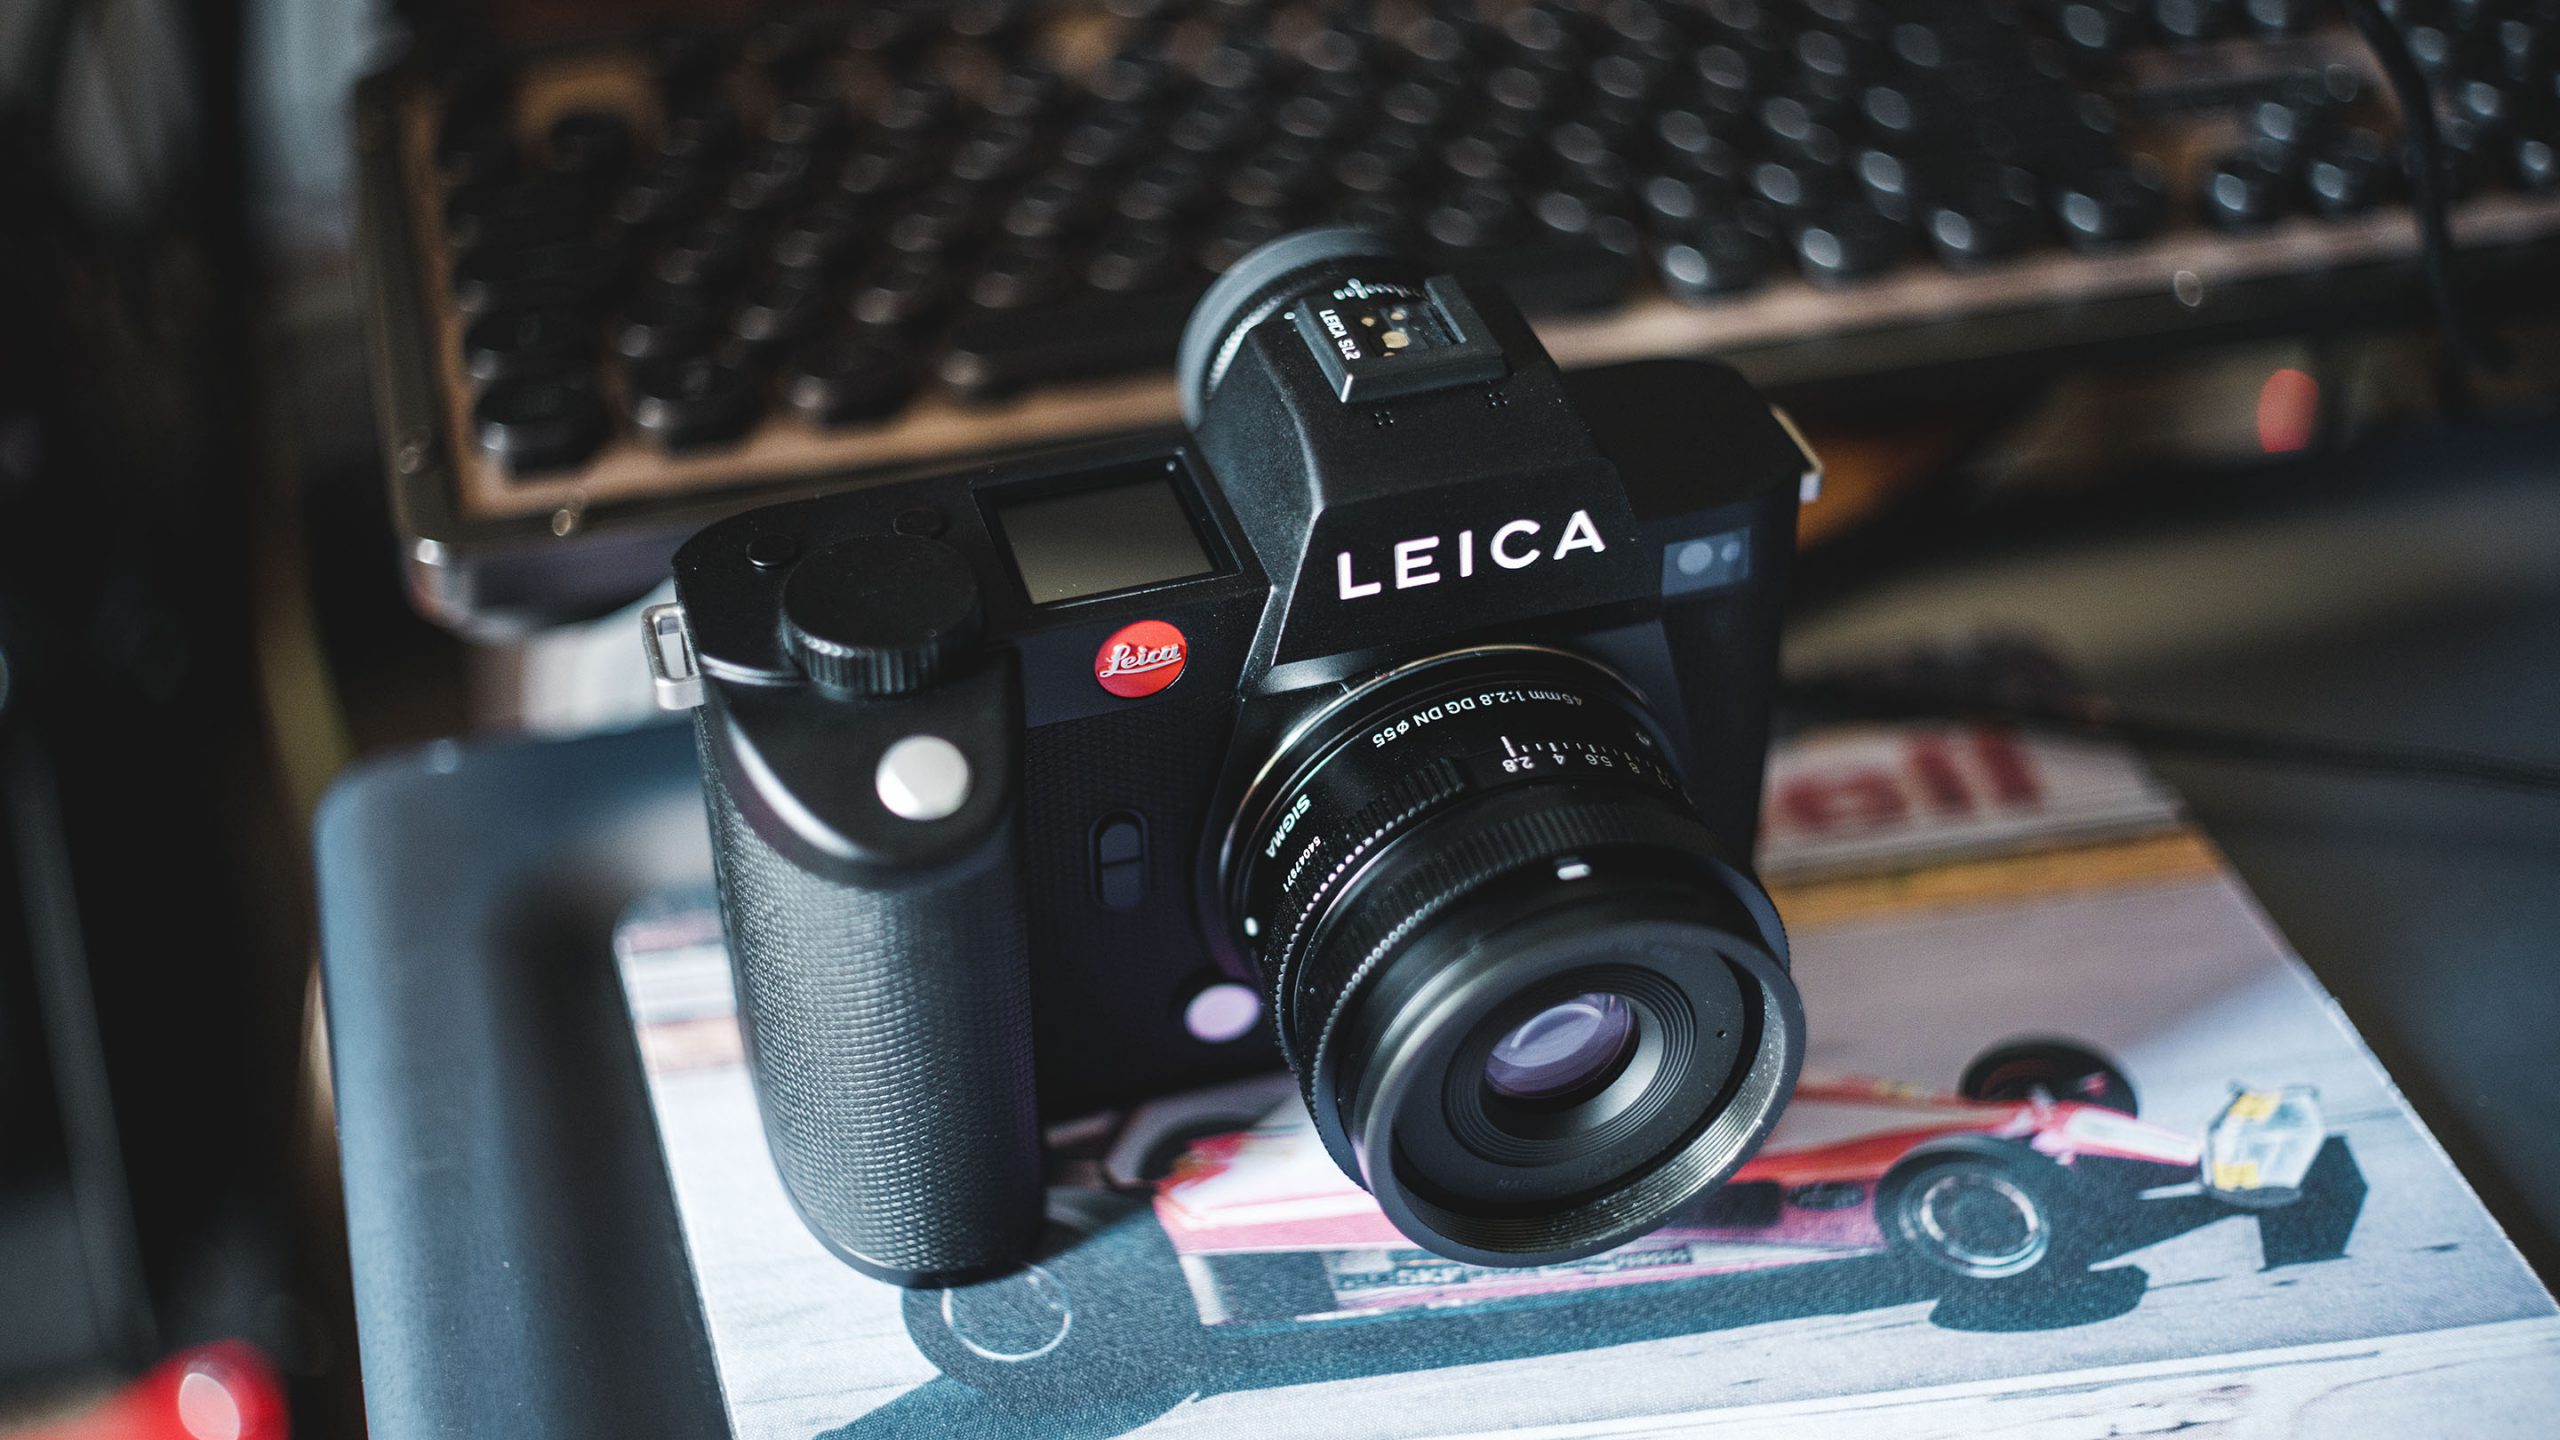 Leica SL2 with Sigma 45mm F2.8